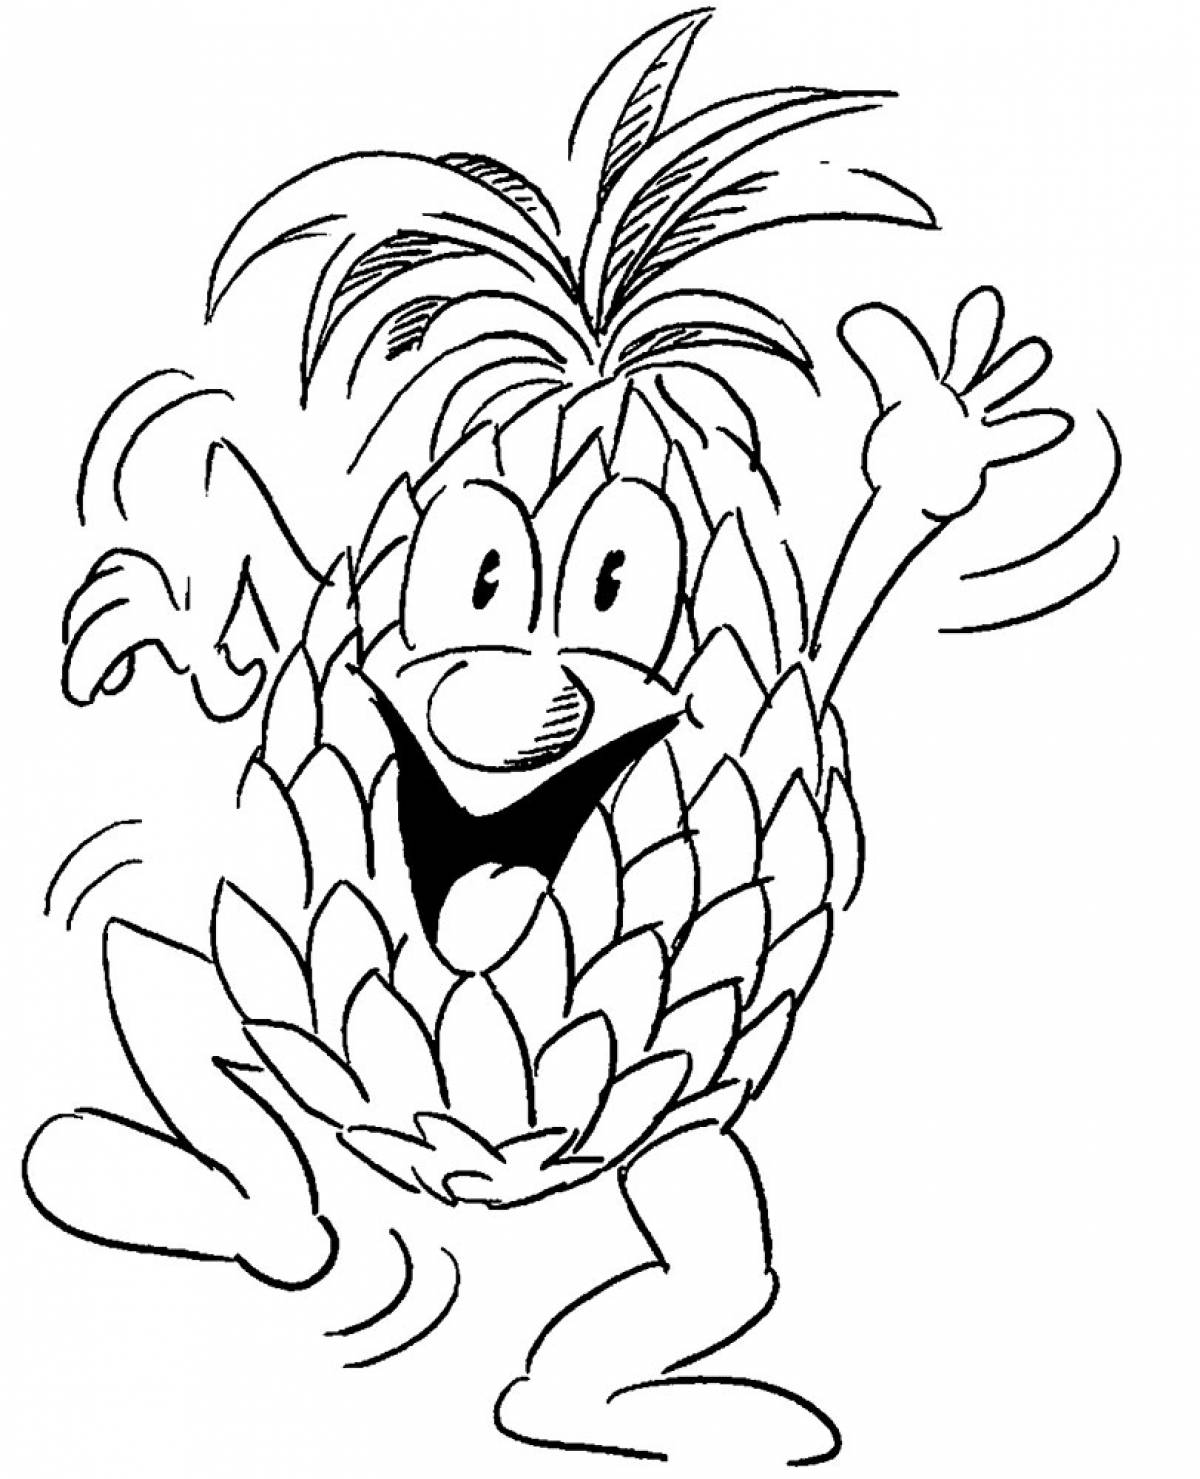 Cheerful pineapple